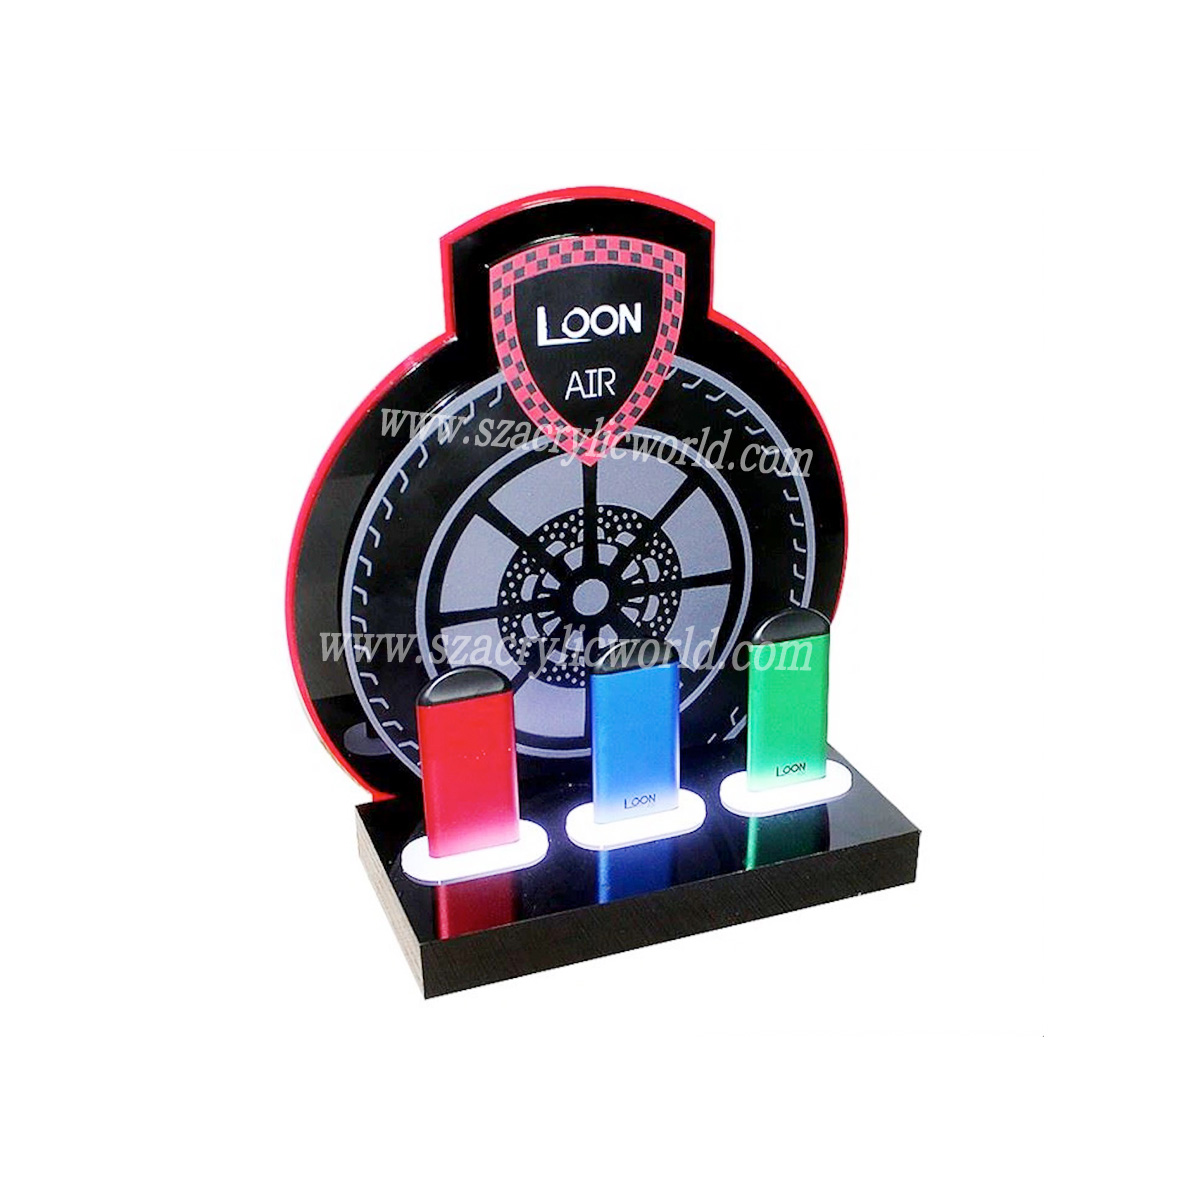 Loon Acrylic Vape Pod Display Stands